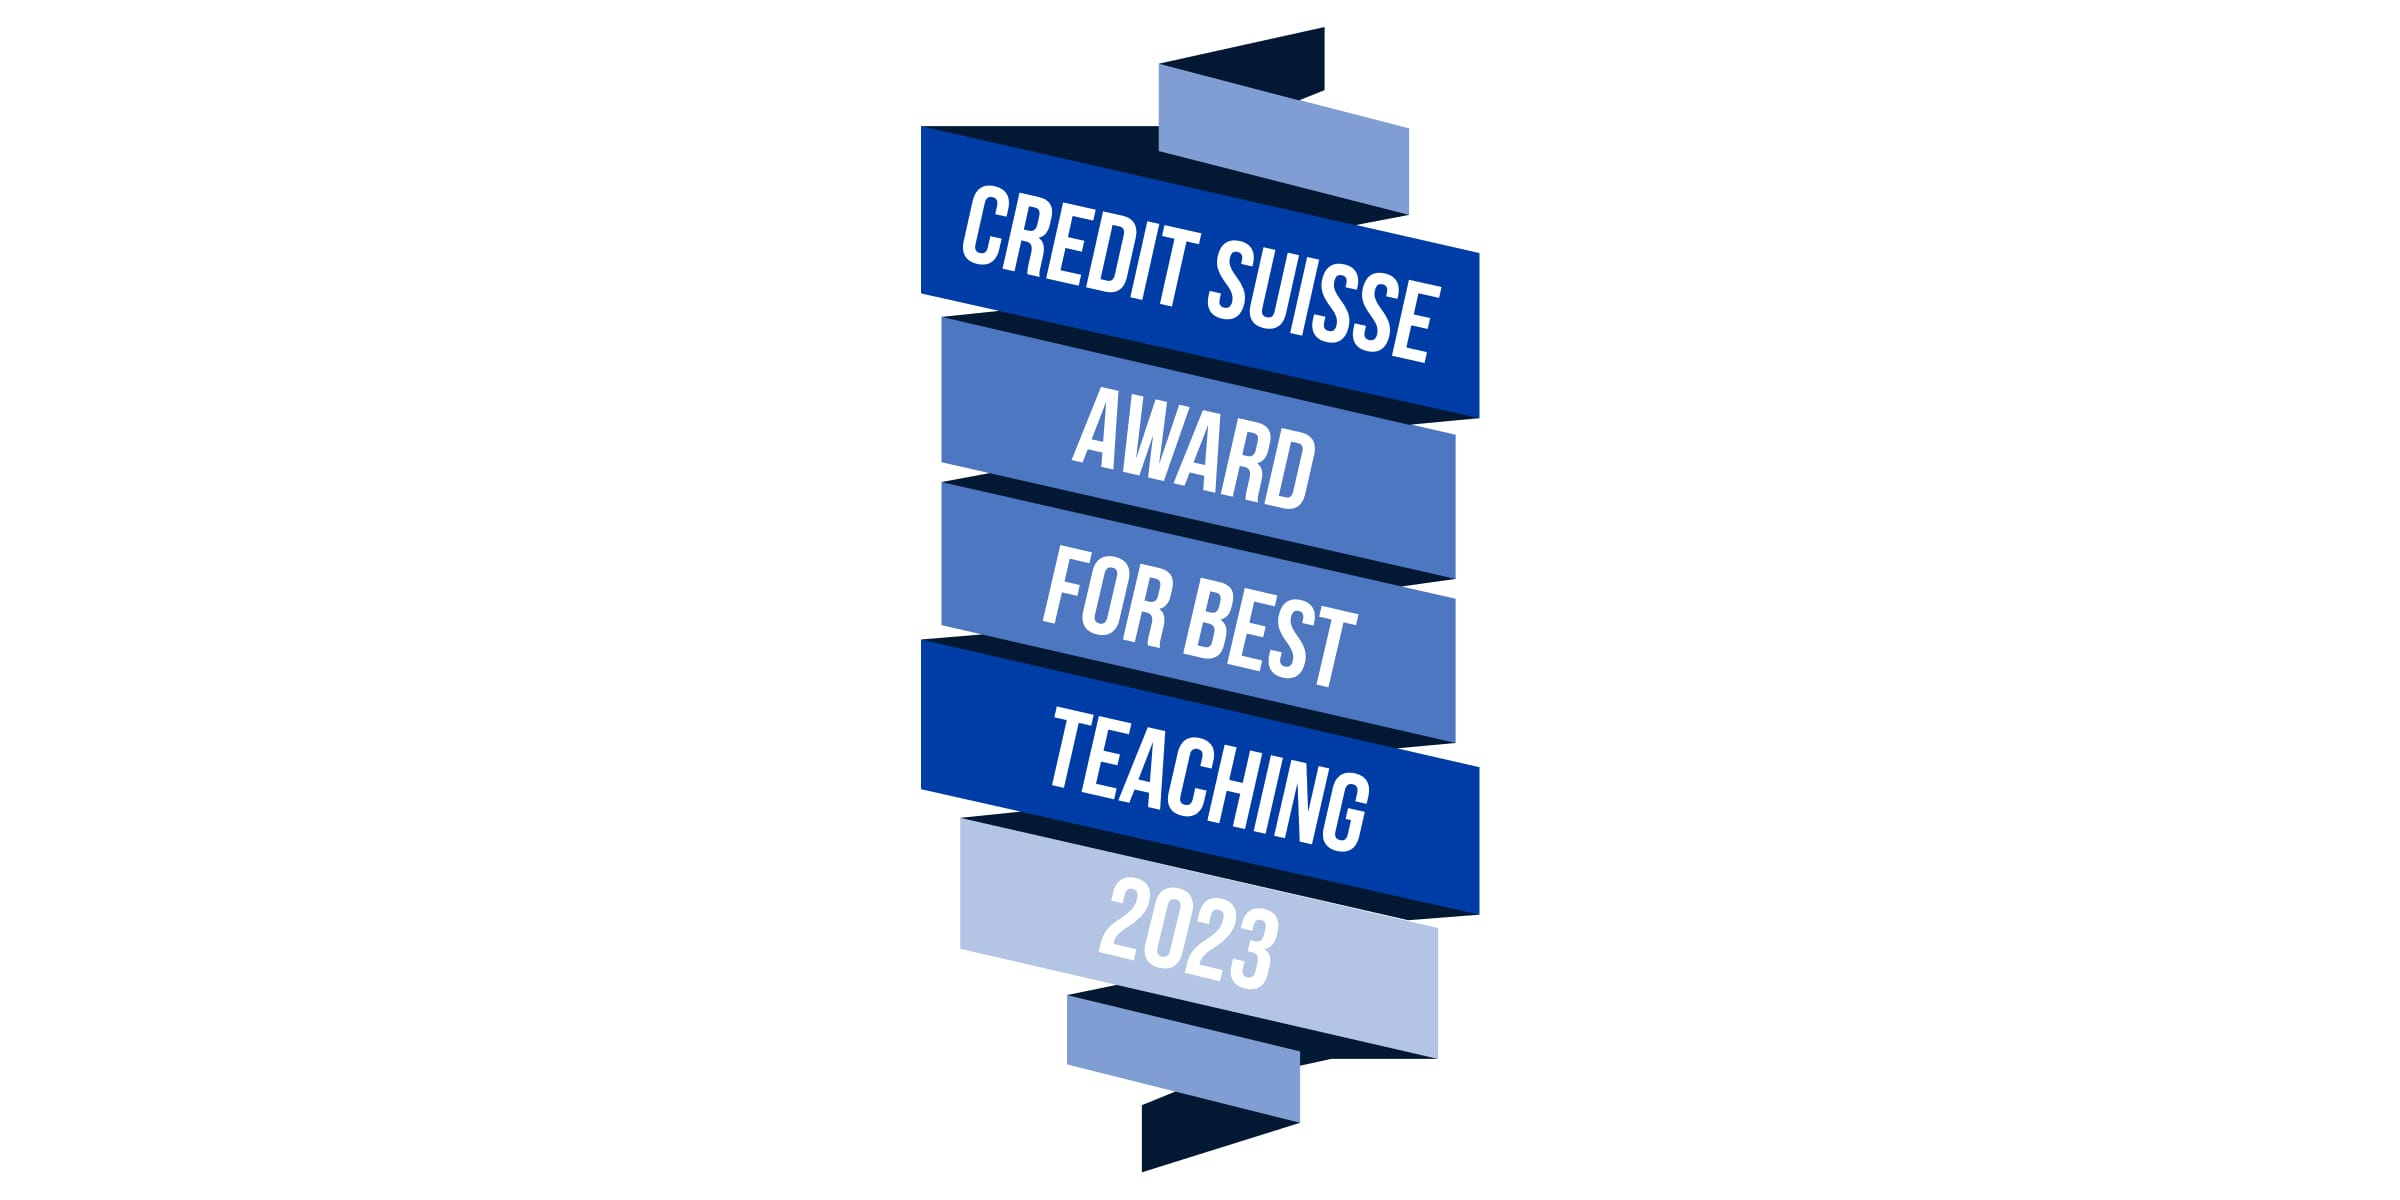 Grafik Credit Suisse Award for Best Teaching 2023 Figma